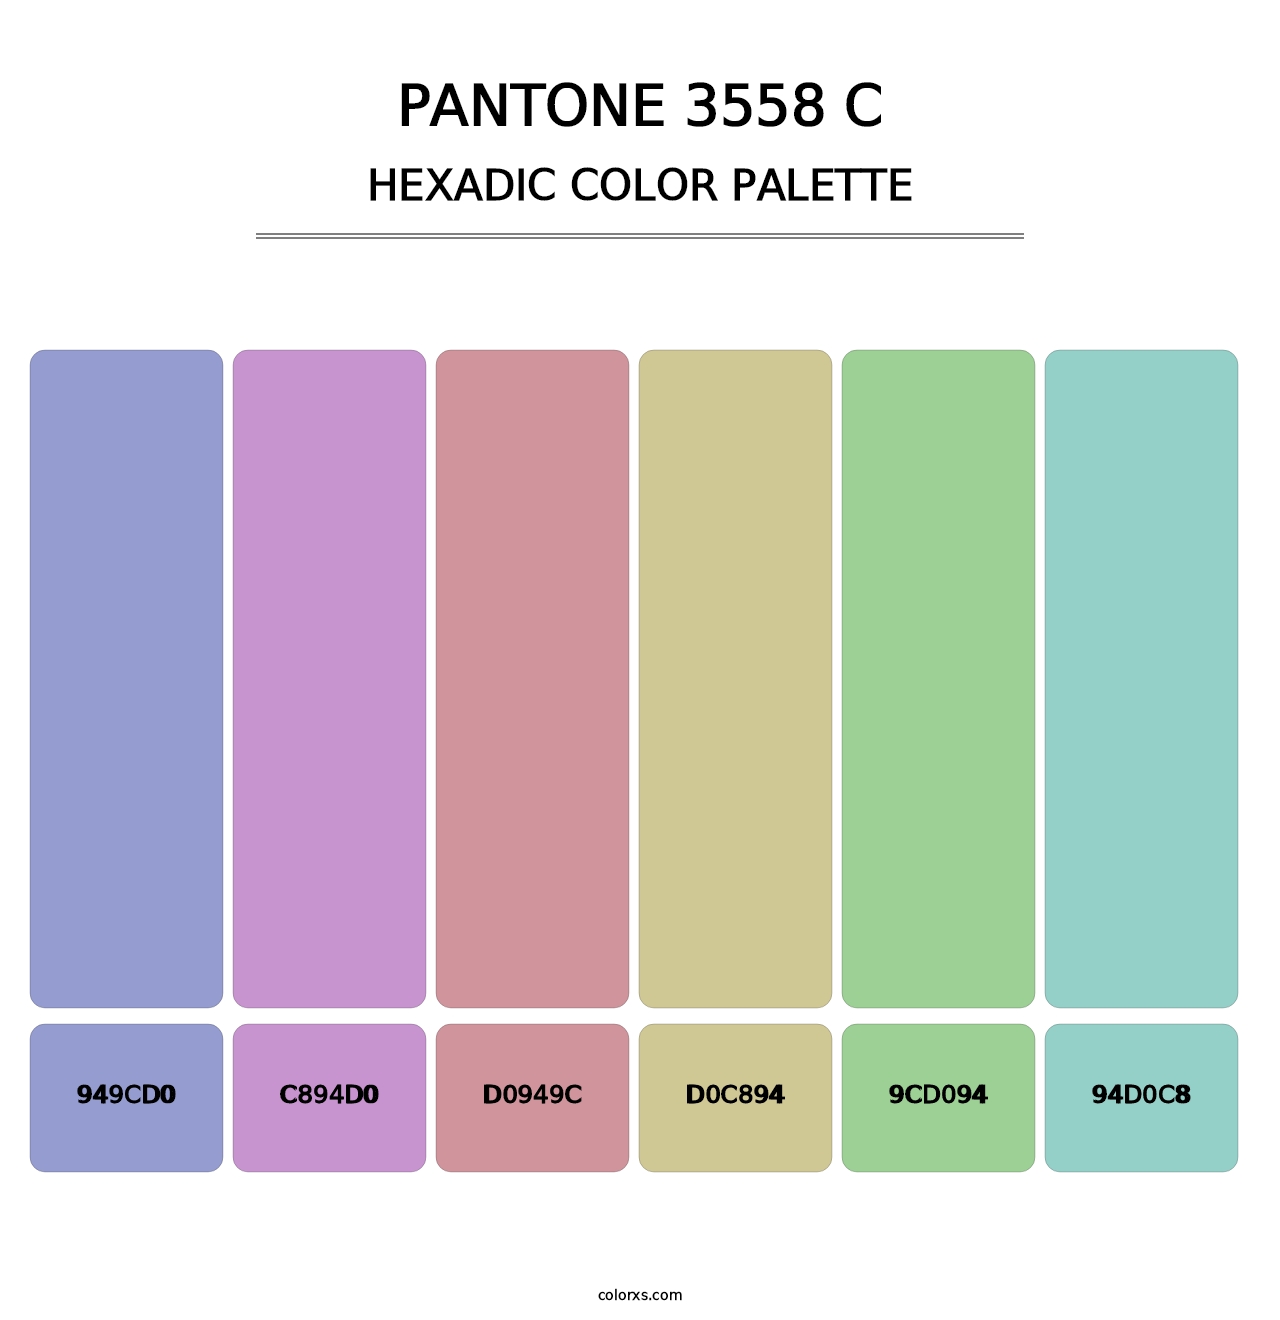 PANTONE 3558 C - Hexadic Color Palette